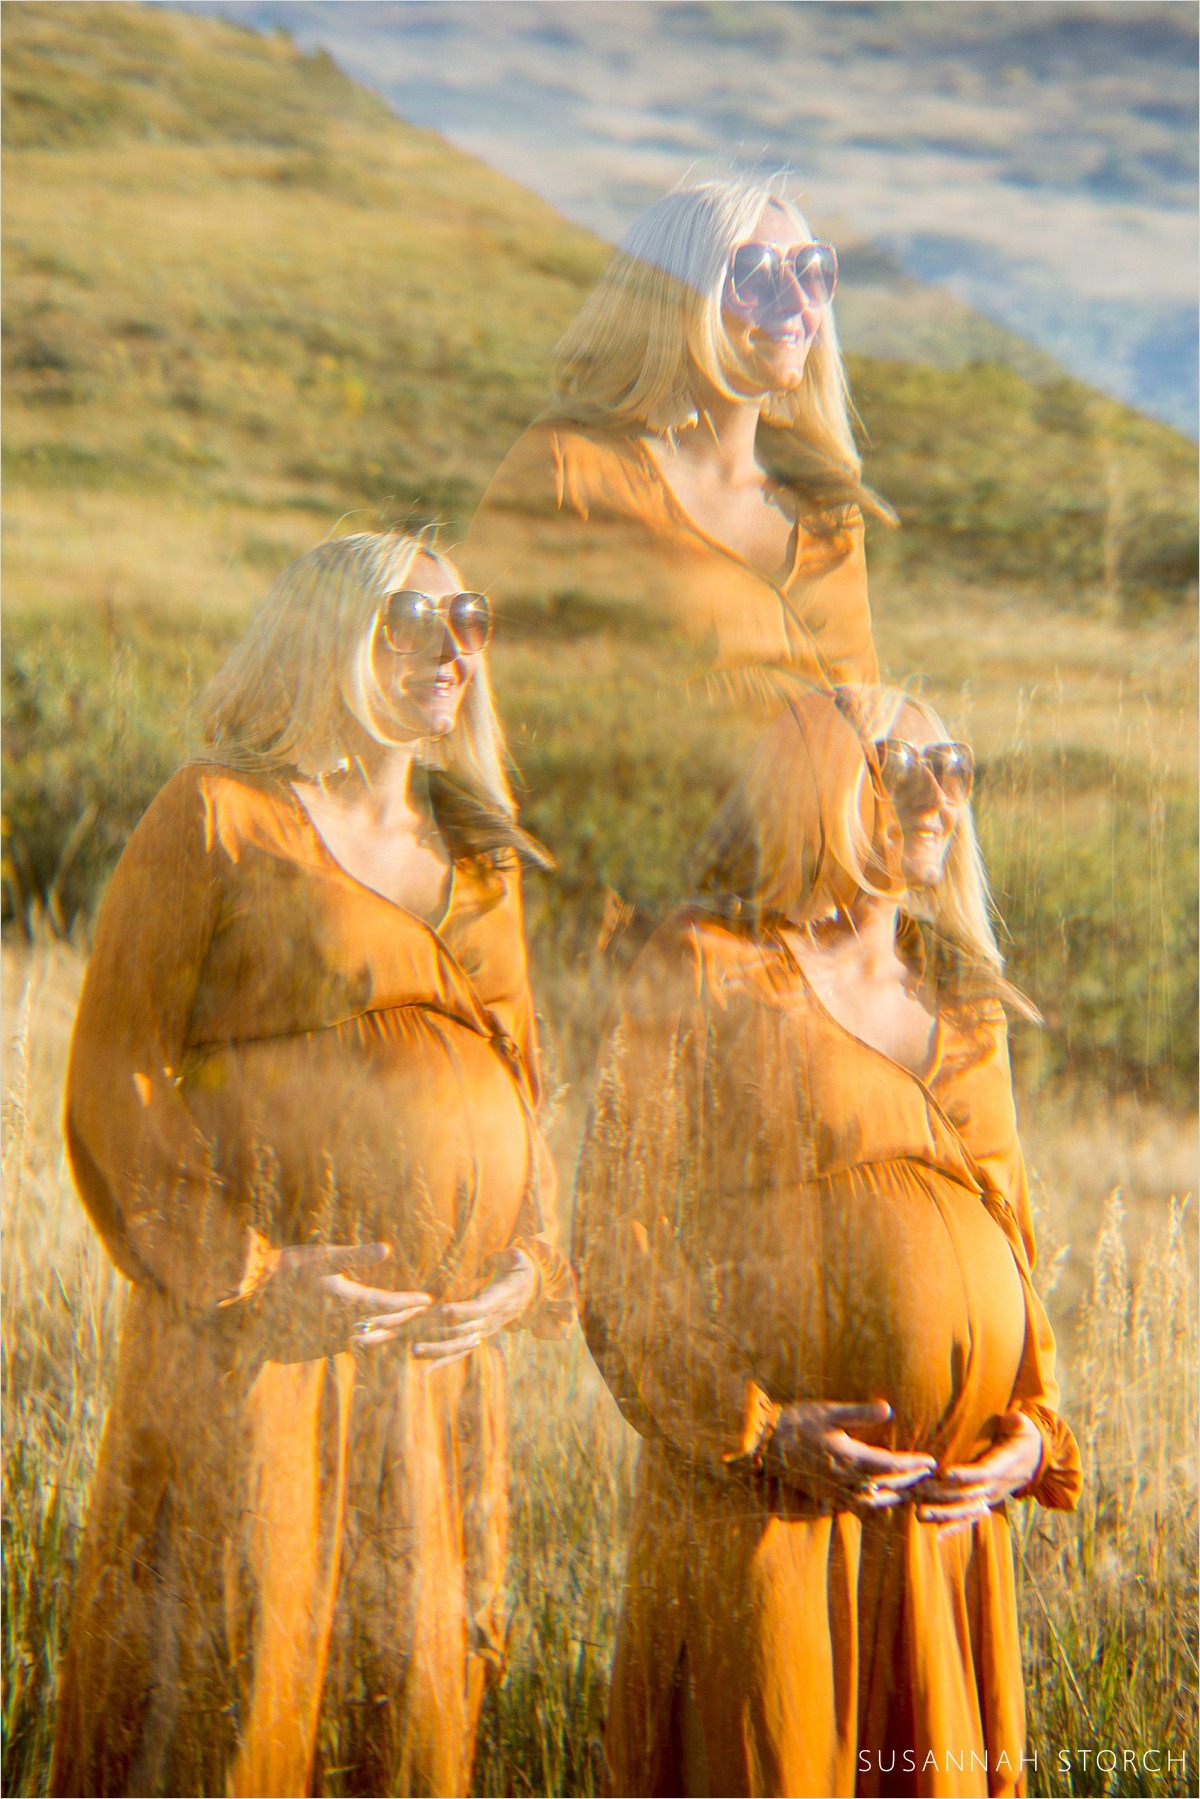 colorado pregnant woman portrait with special lens